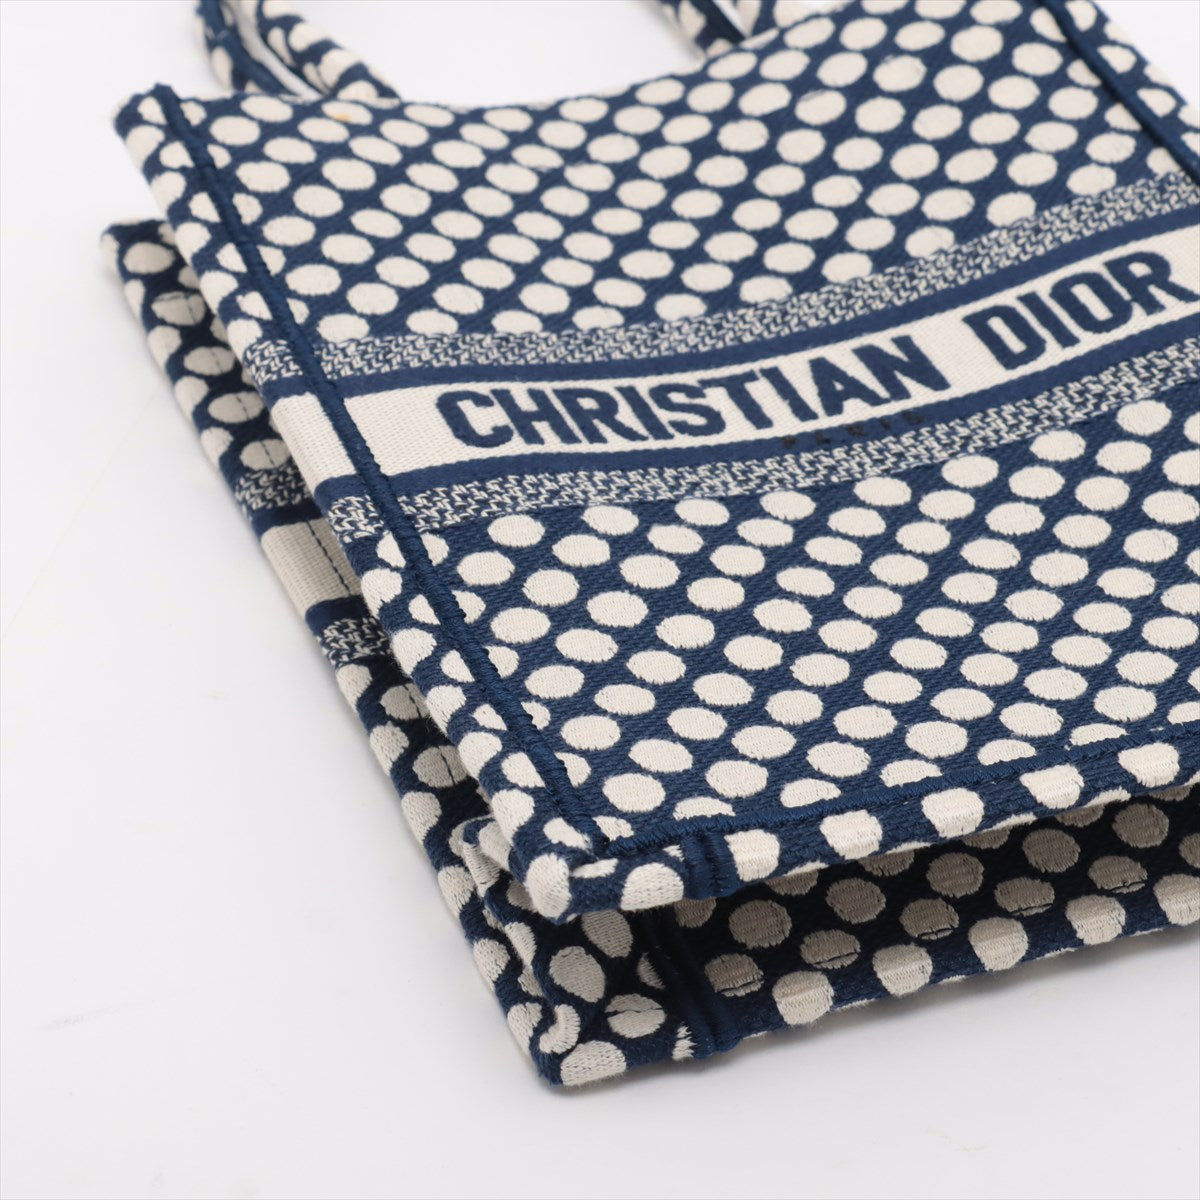 Christian Dior Vertical Book Tote canvas Handbag Navy Blue